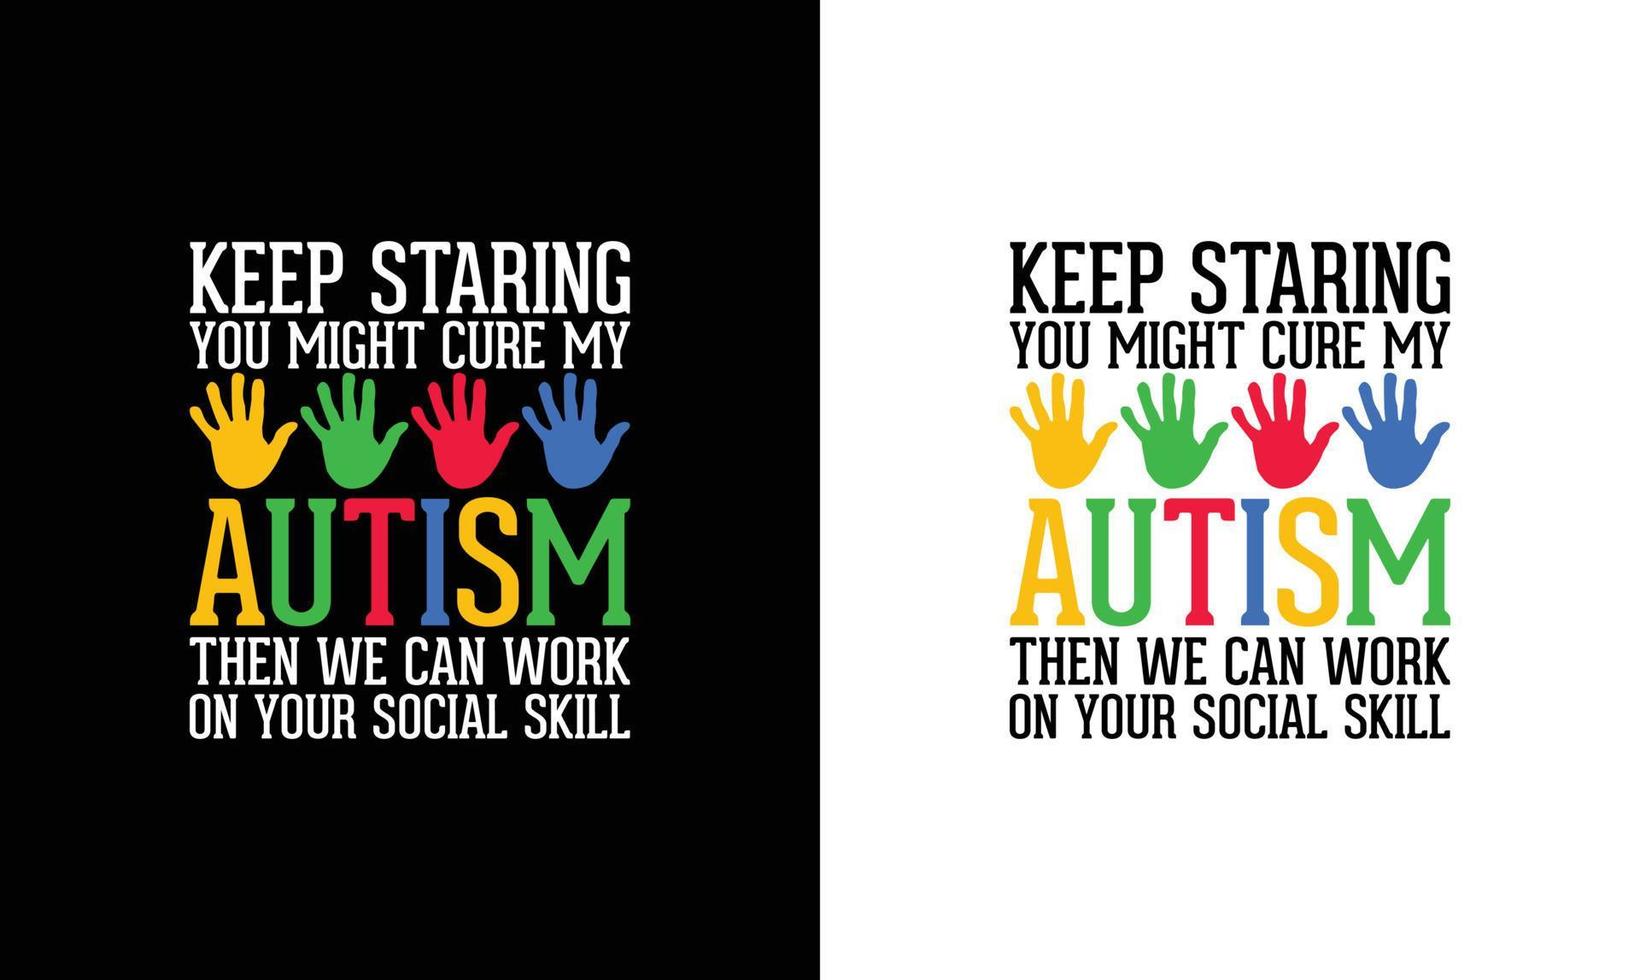 autismo citar t camisa projeto, tipografia vetor